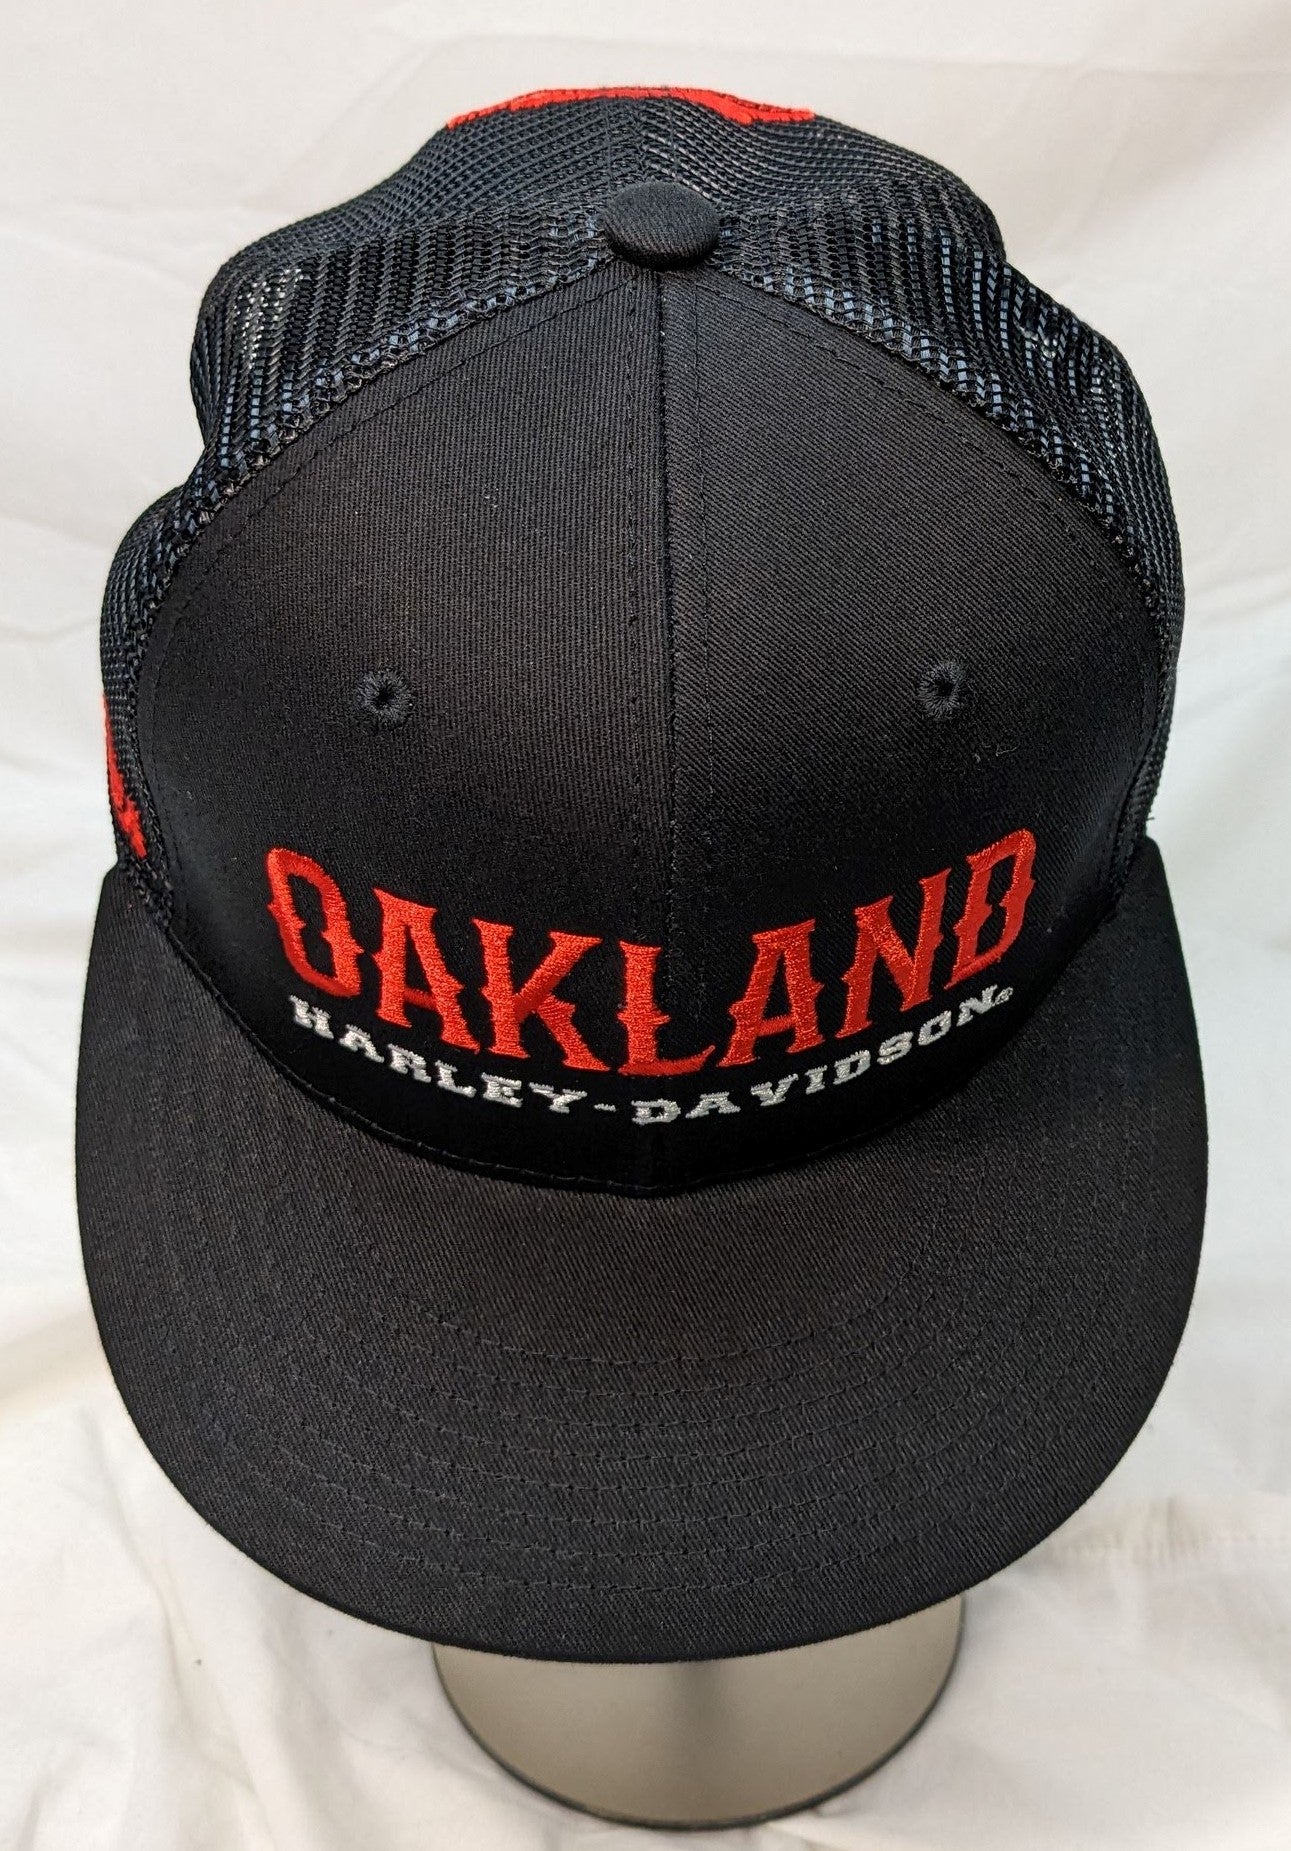 Oakland Harley-Davidson Ballcap - Red Trucker style with Oakland brim